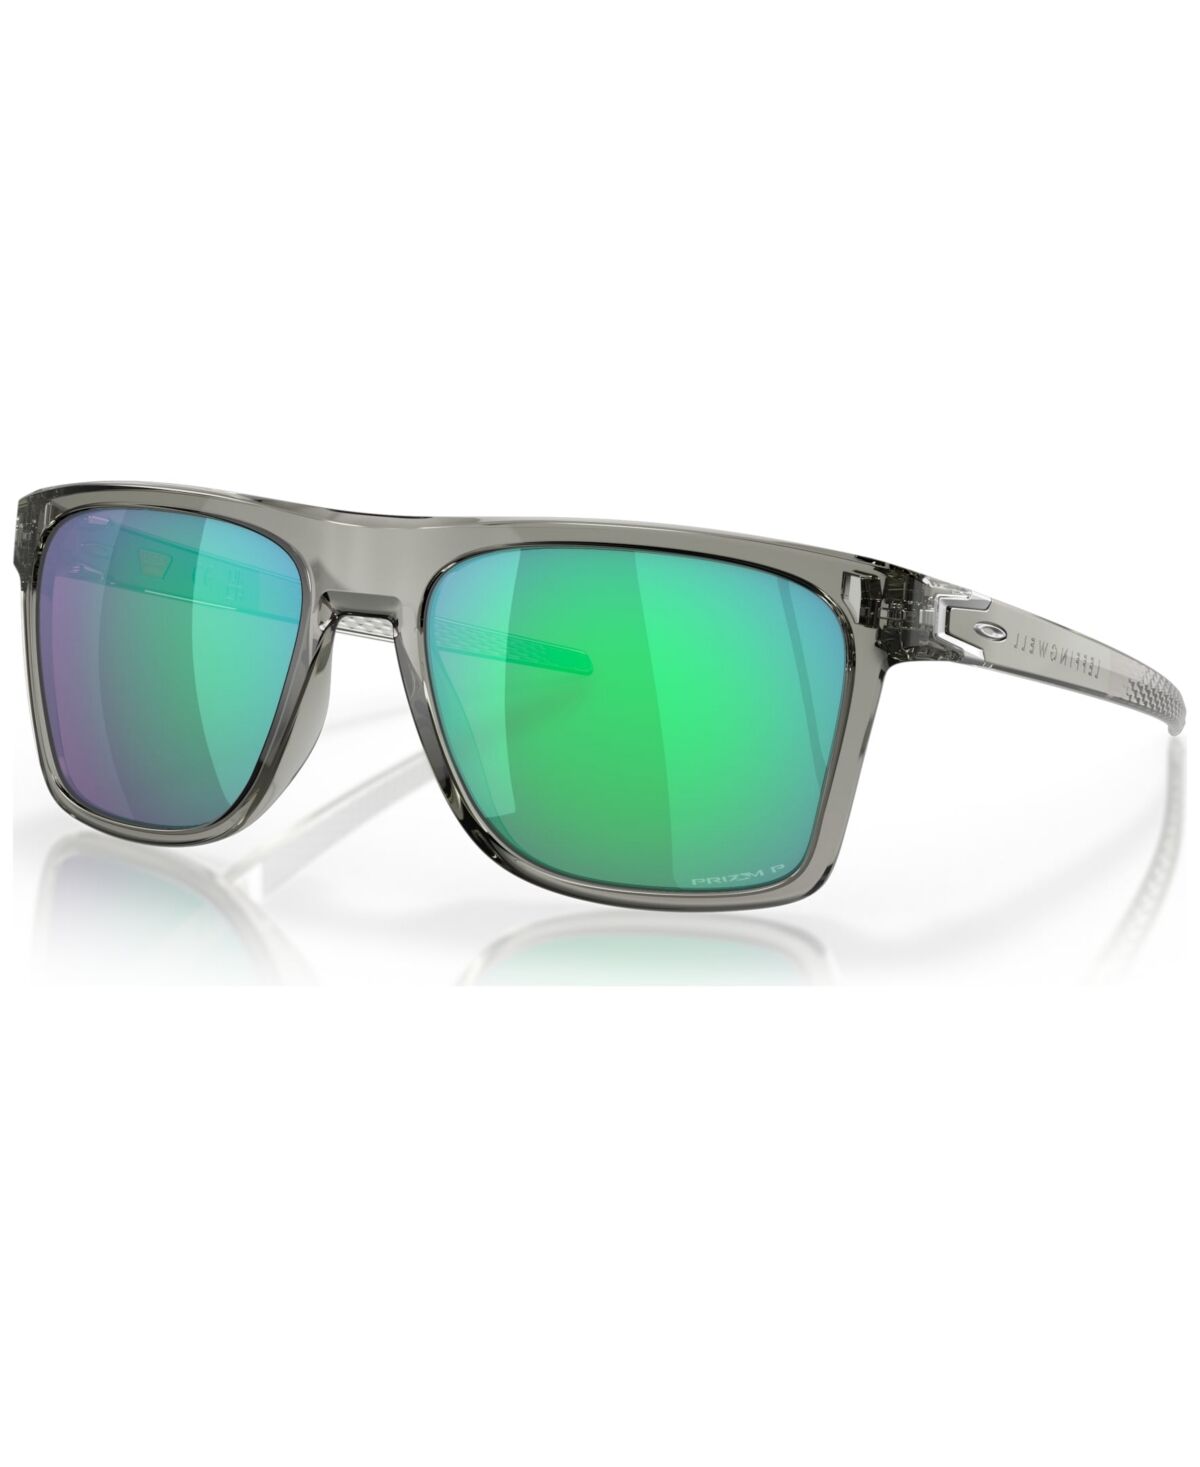 Oakley Men's Polarized Sunglasses, Leffingwell 57 - Gray Ink